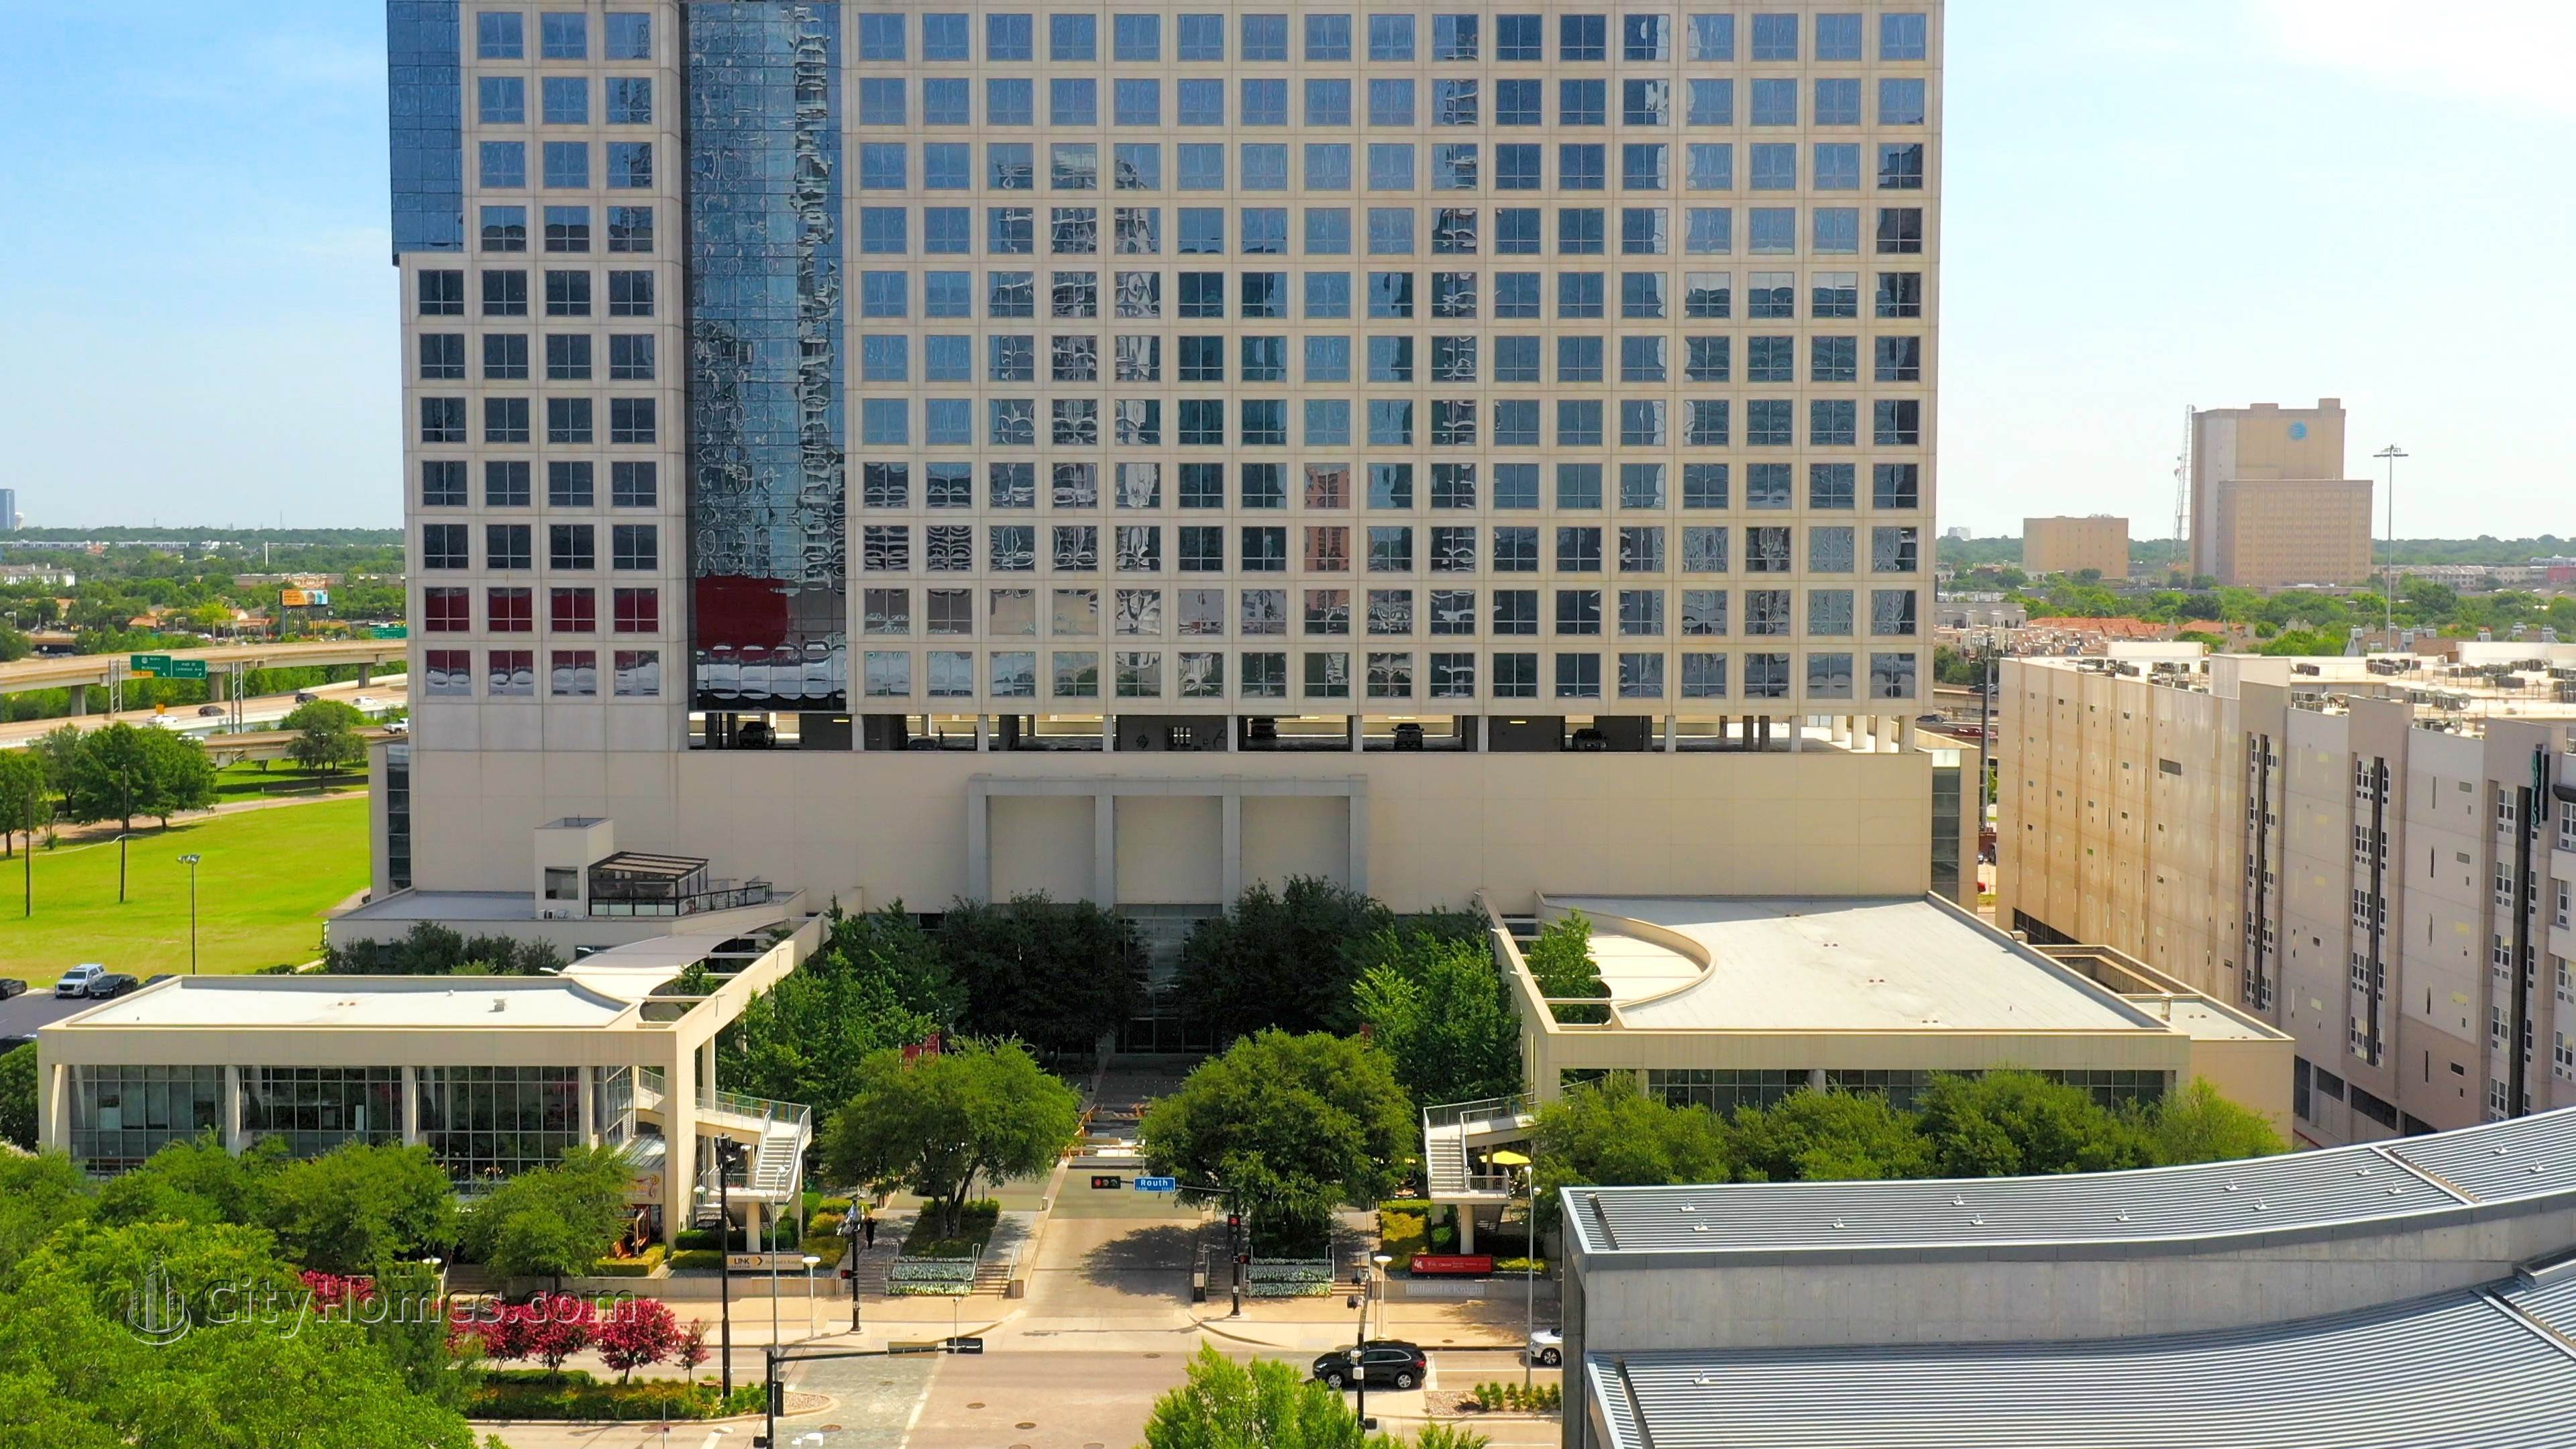 1717 Arts Plaza, Arts District, Dallas, TX 75201에 One Arts Plaza 건물